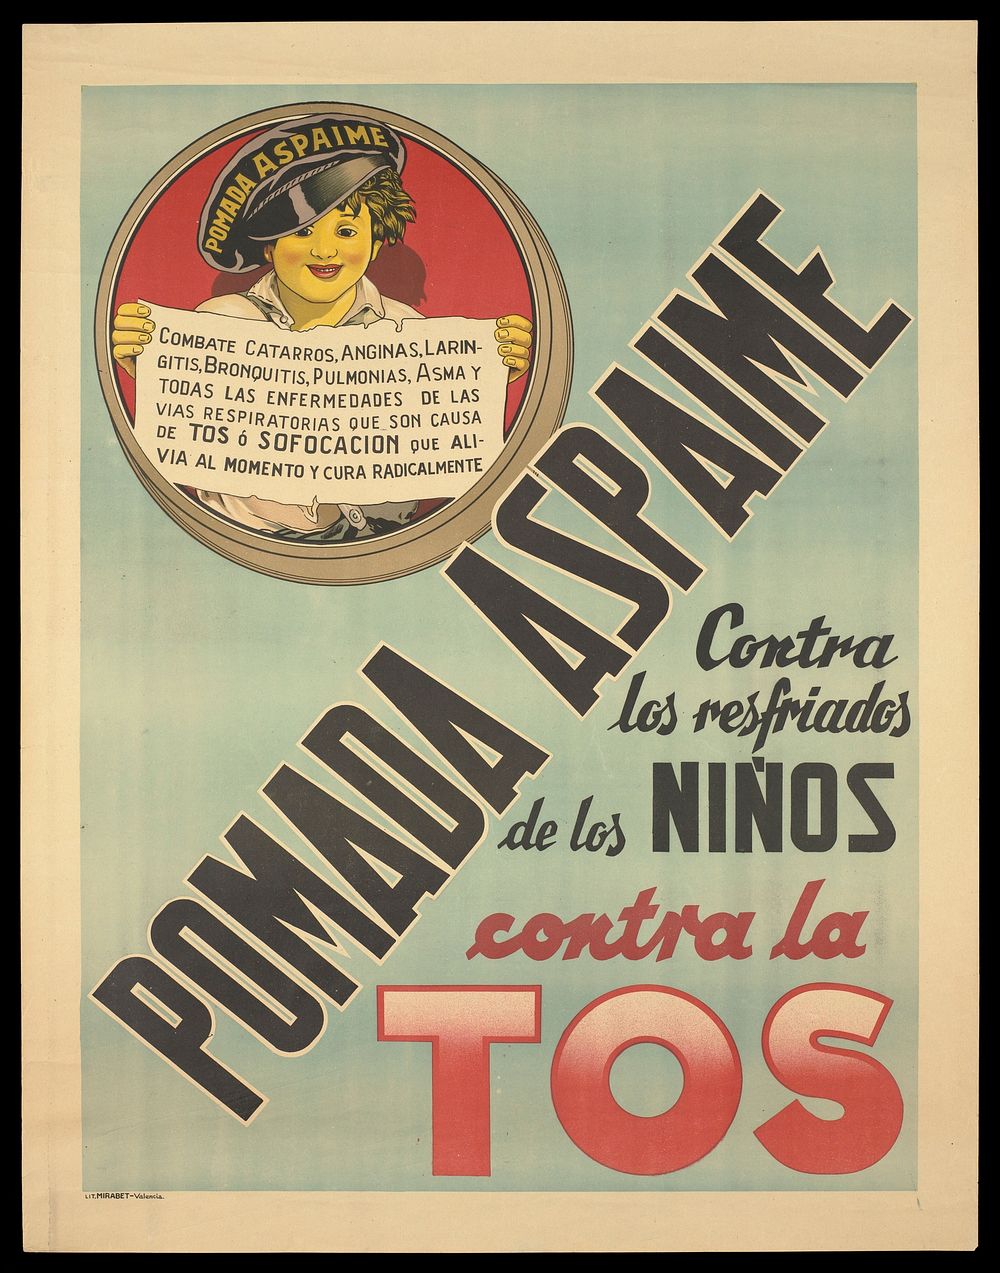 Pomada Aspaime, a remedy for respiratory complaints: advertisement. Colour lithograph, ca. 1910.